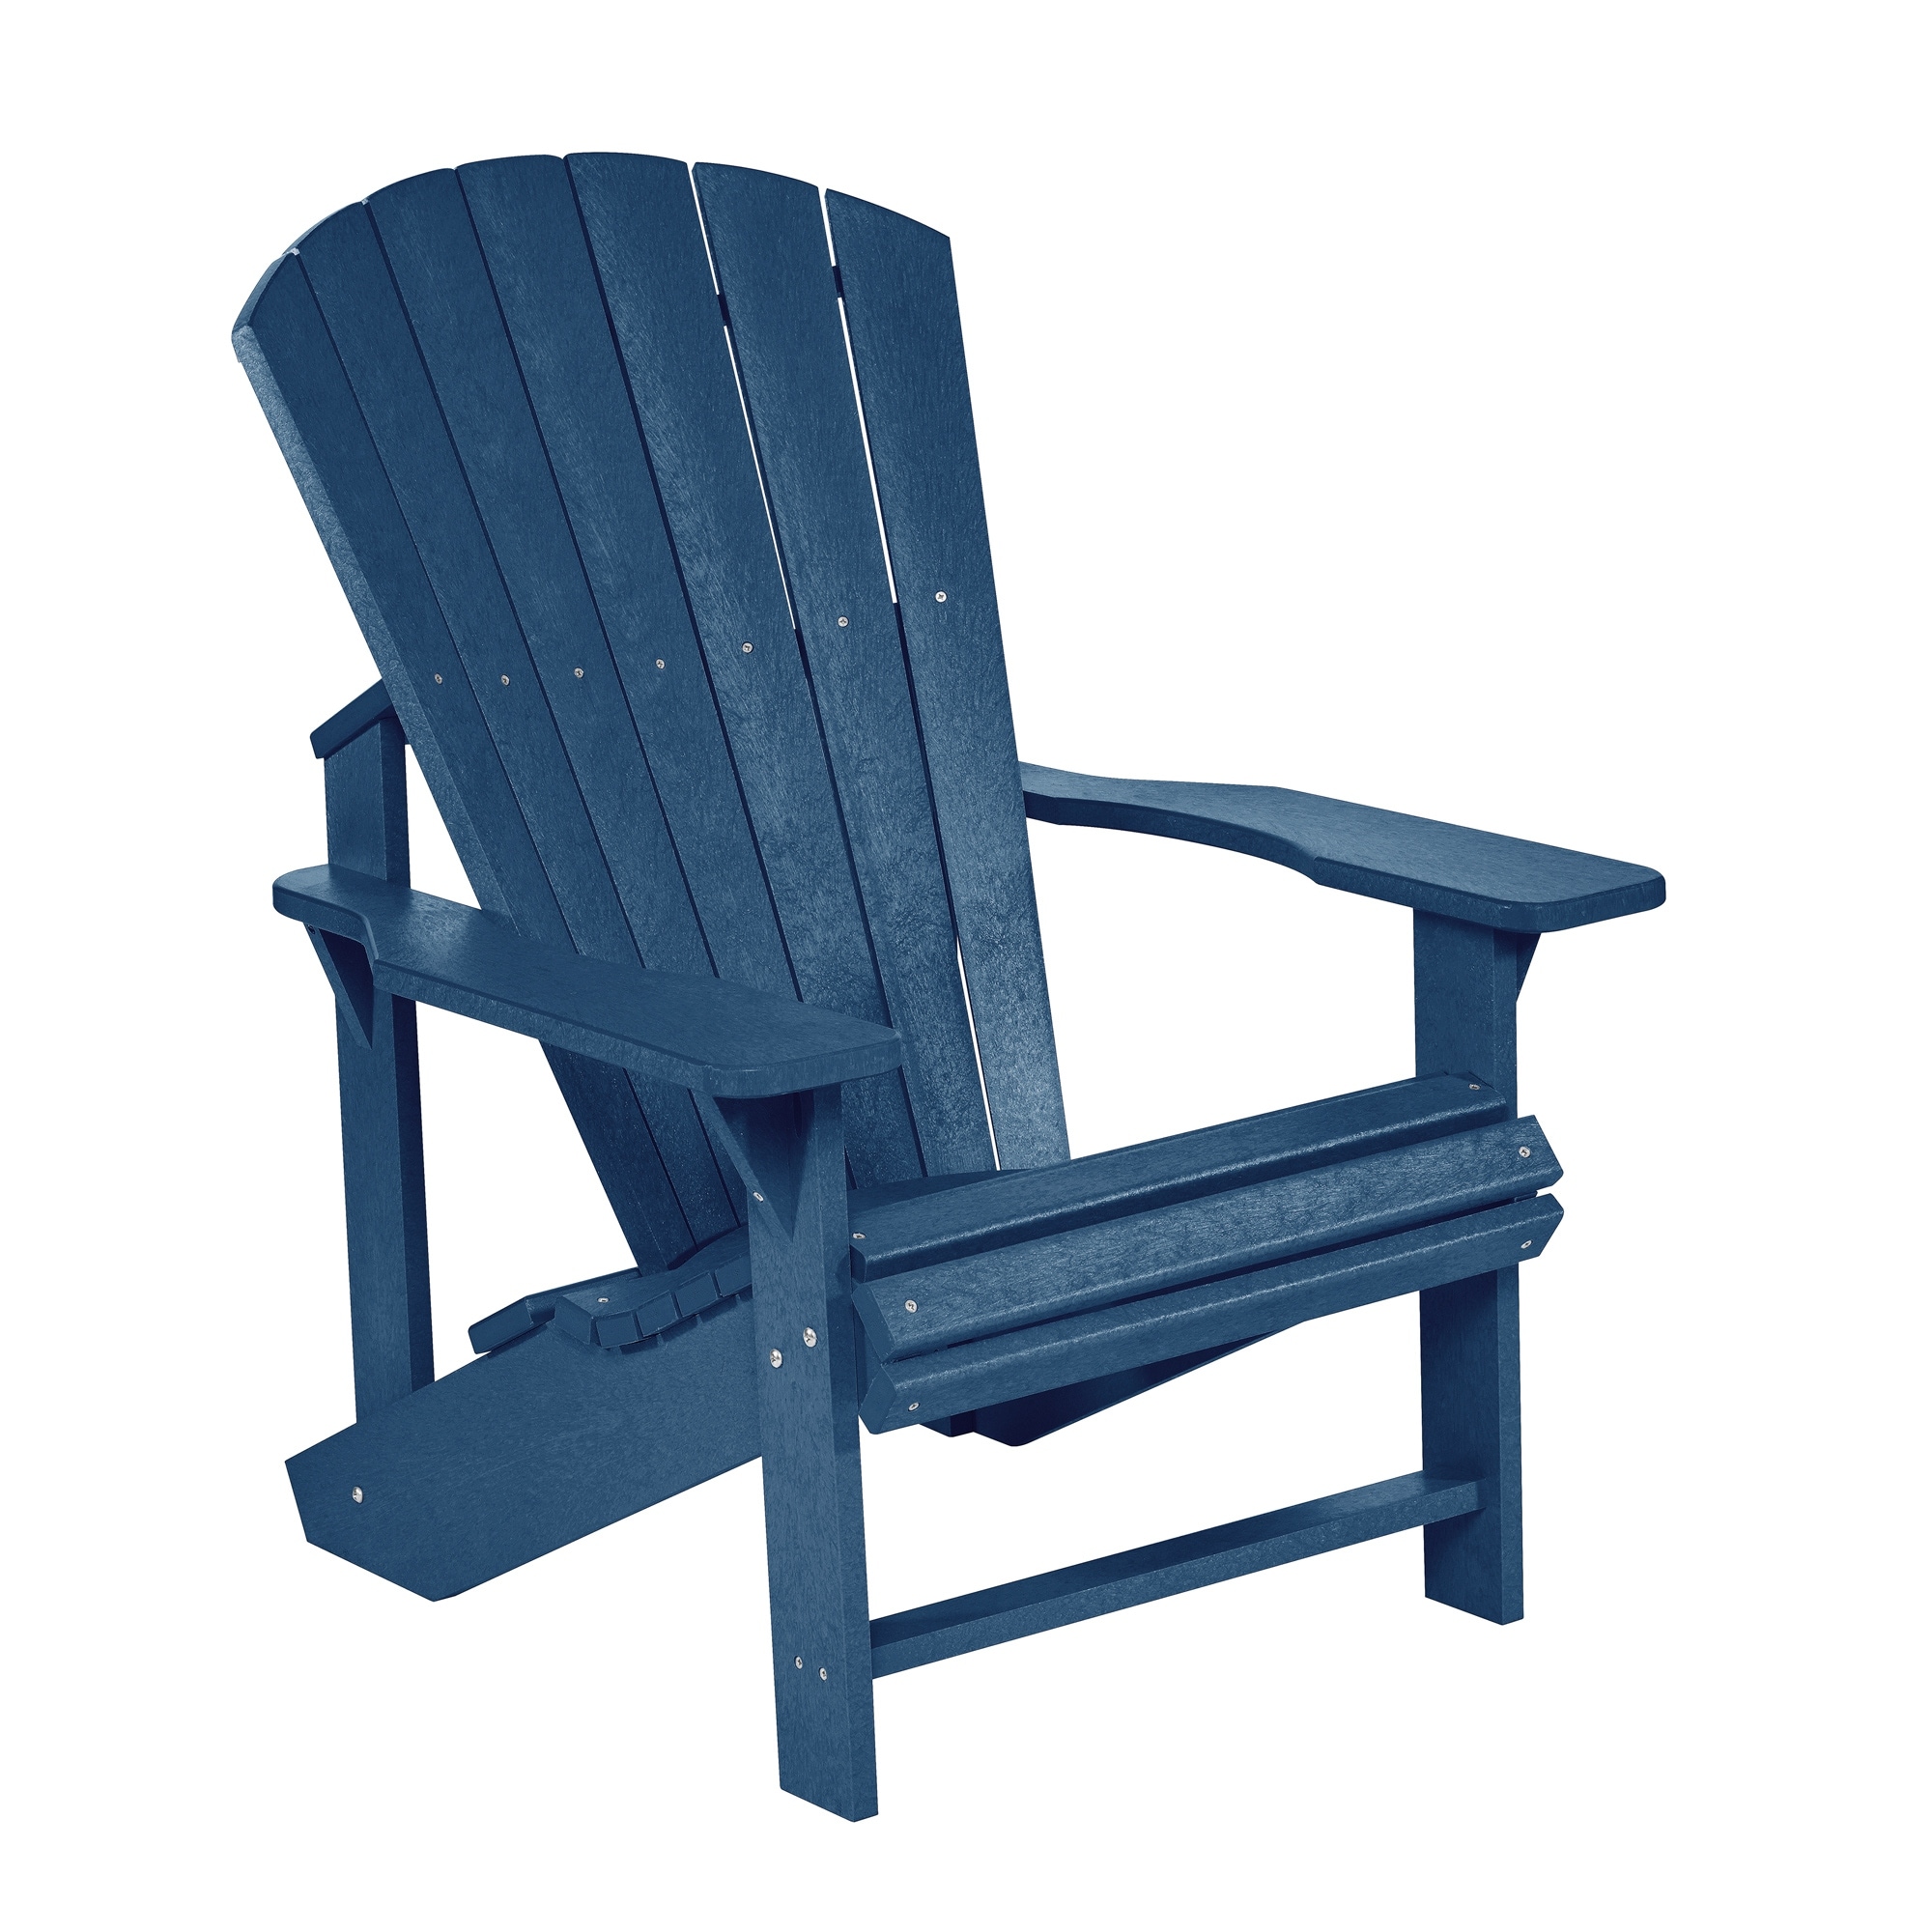 C.r. Plastics Generation Adirondack Chair